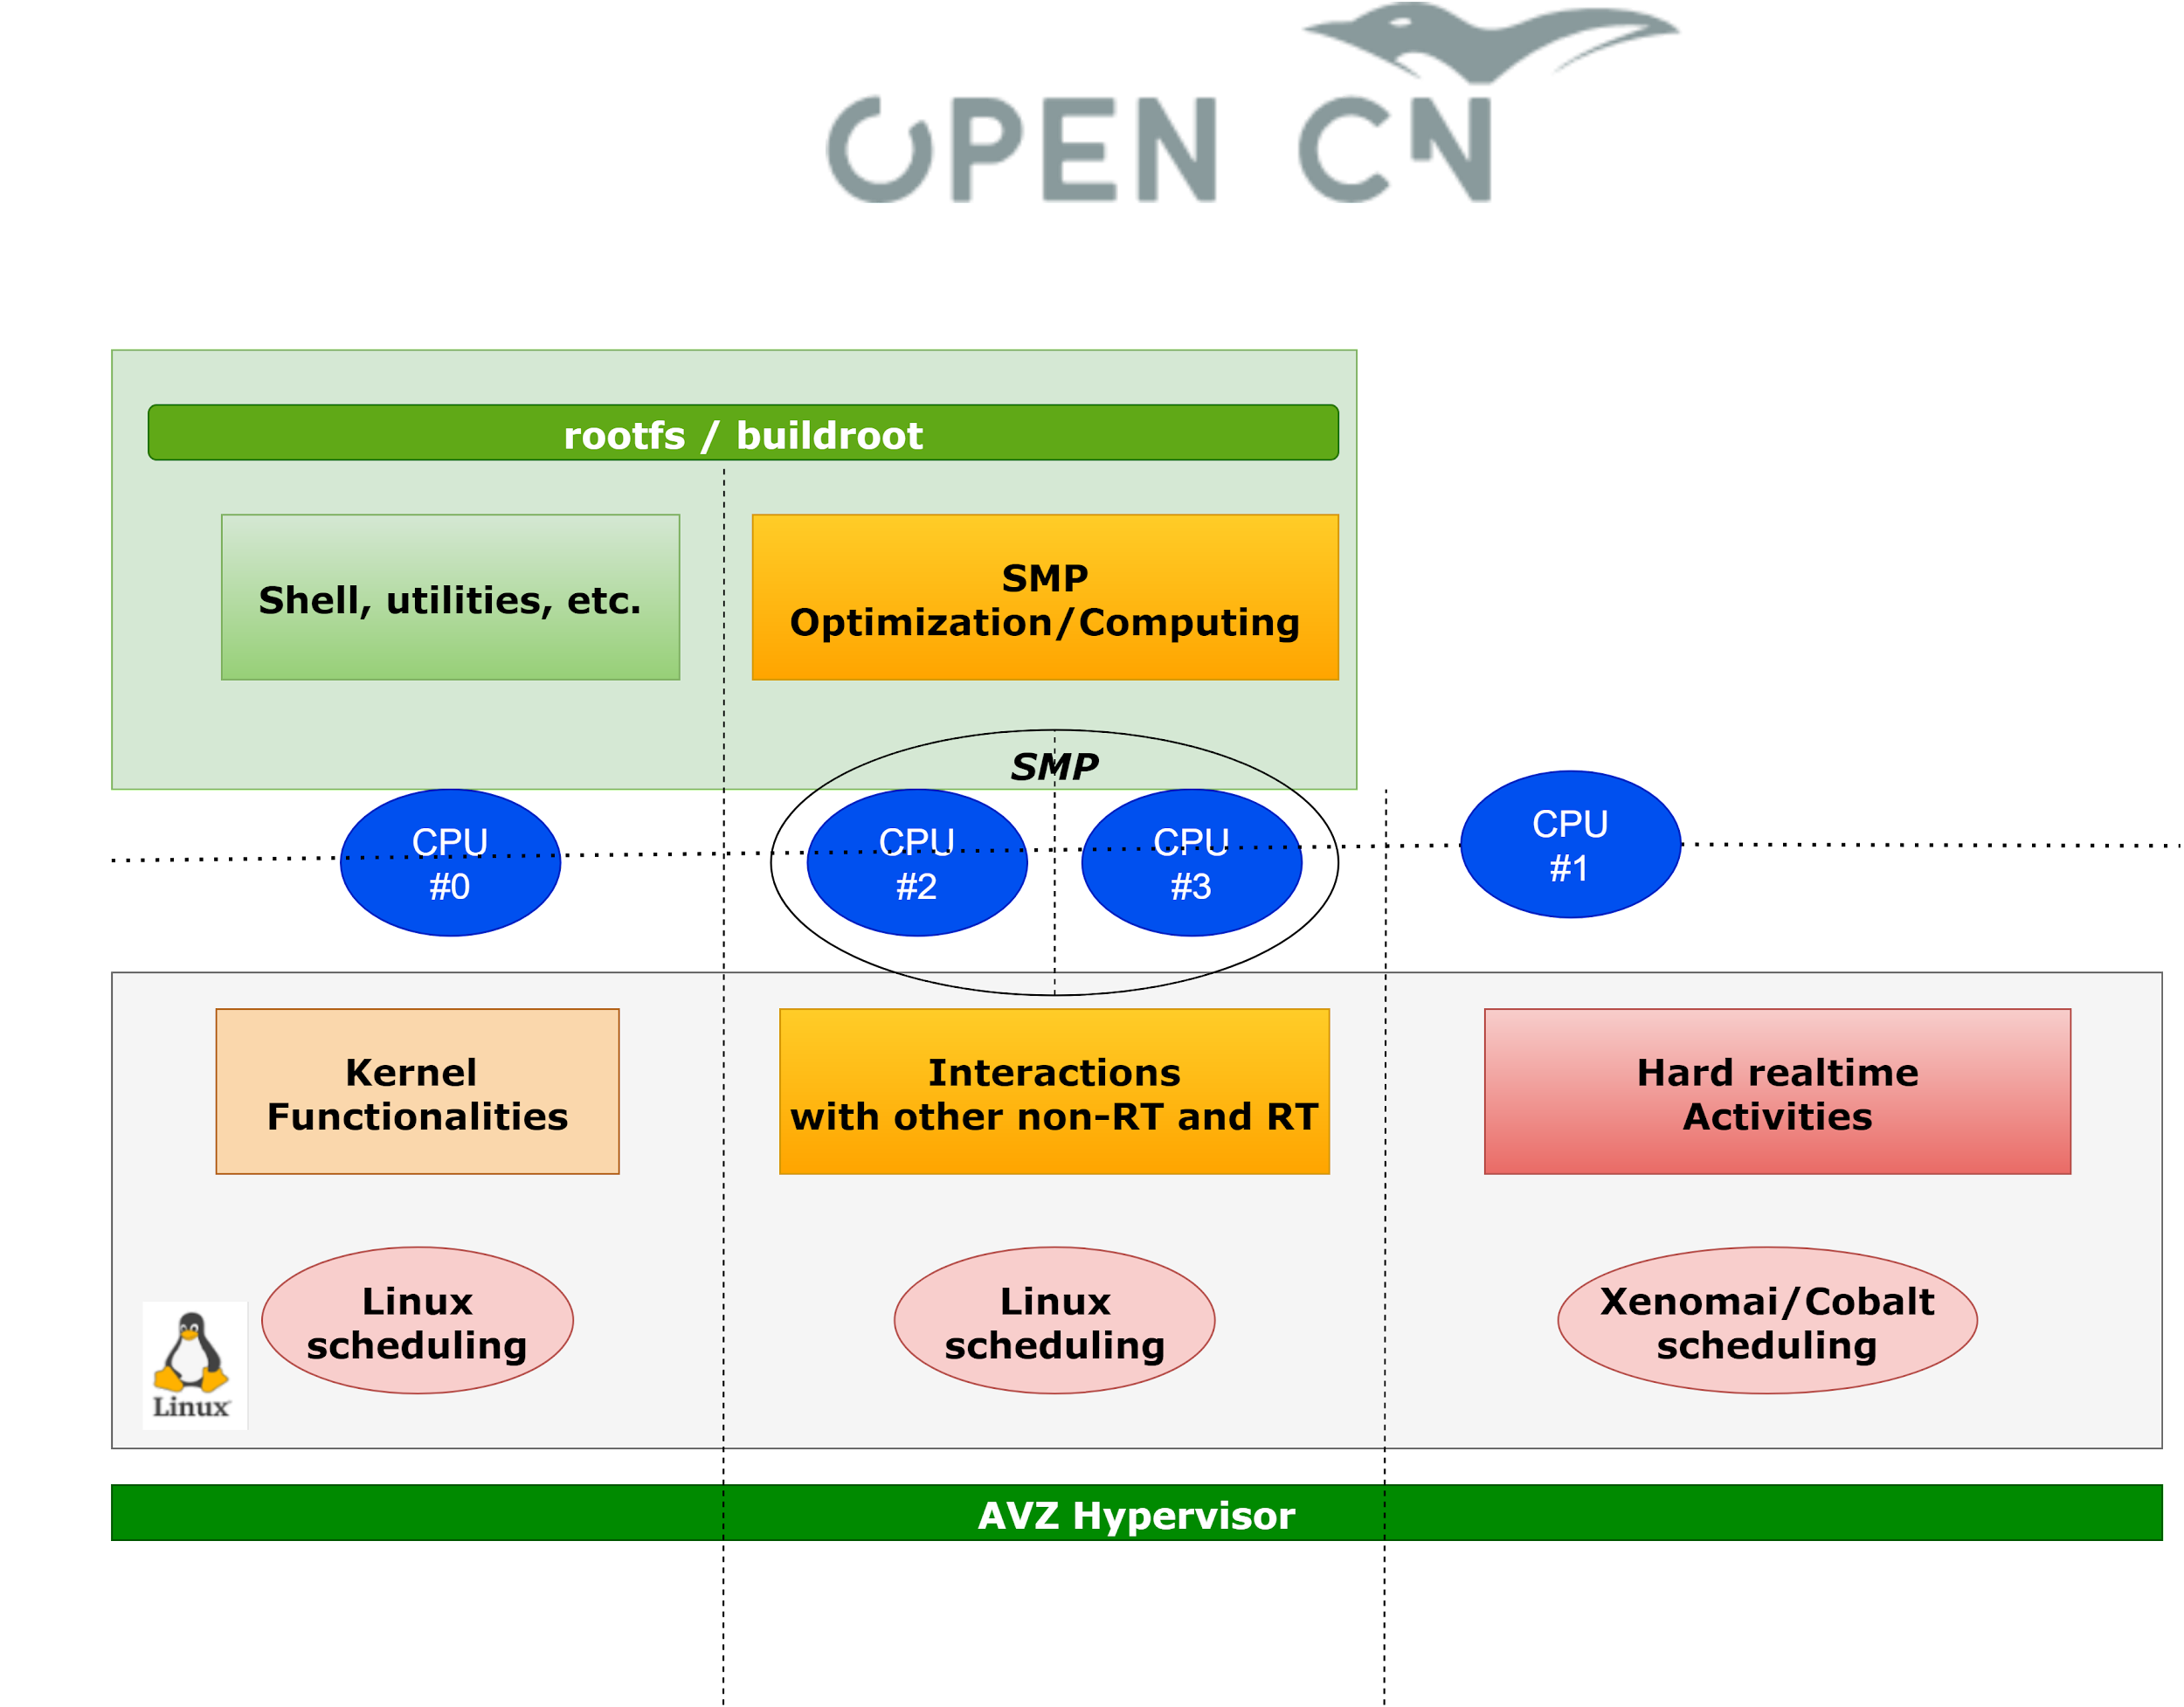 OpenCN2